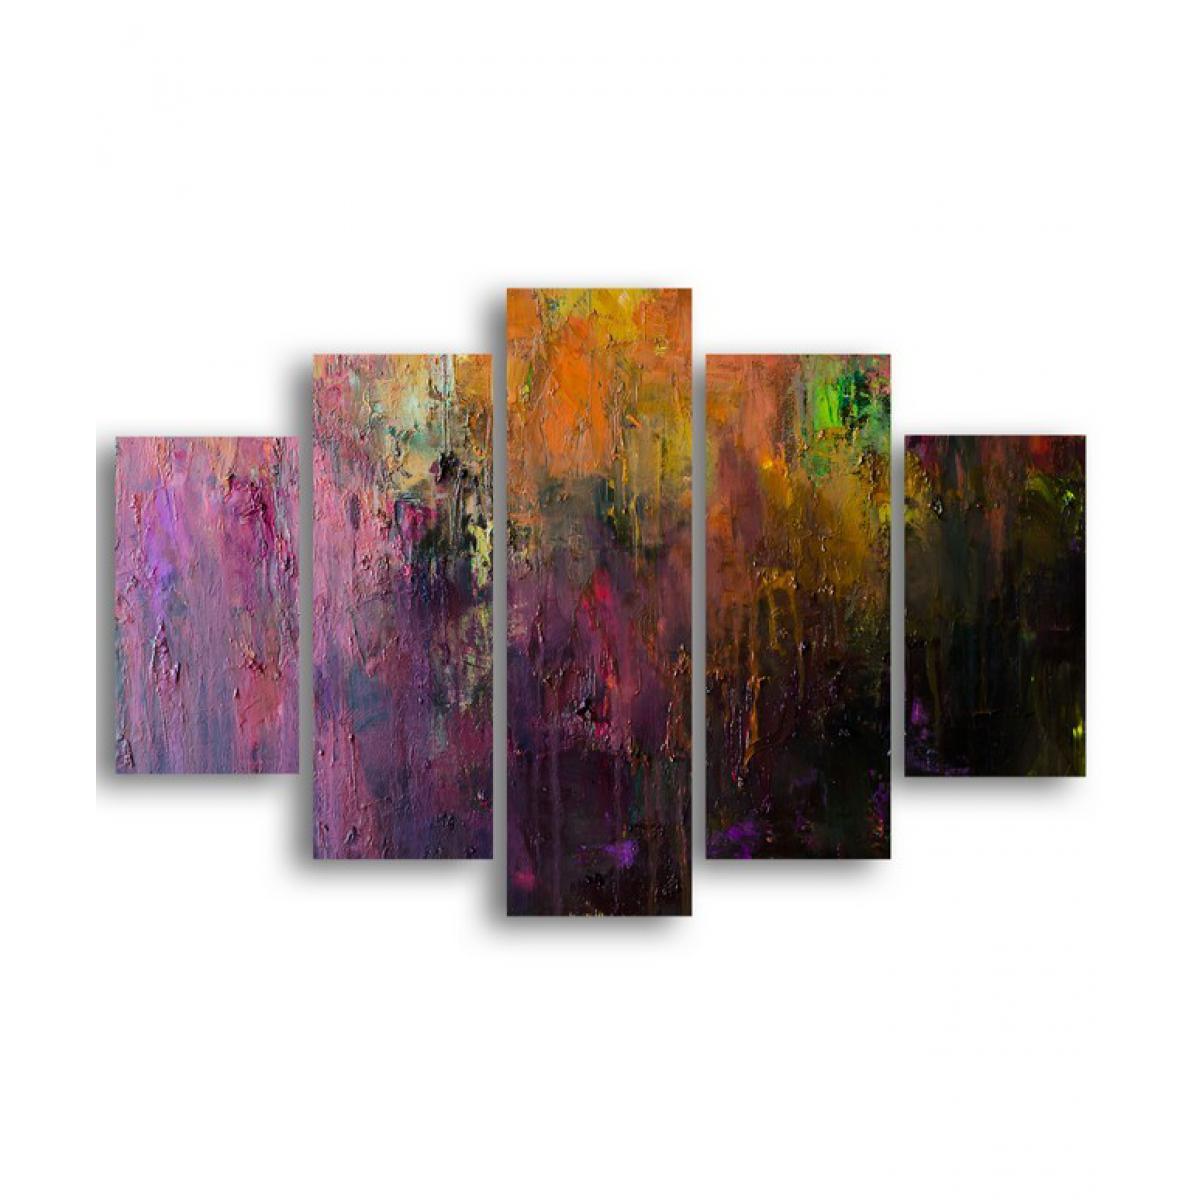 Homemania - HOMEMANIA Tableau Pluie - 5 Pieces - Abstract - for Living Room, Room - Multicouleur en MDF, 95 x 0,3 x 60 cm - Tableaux, peintures